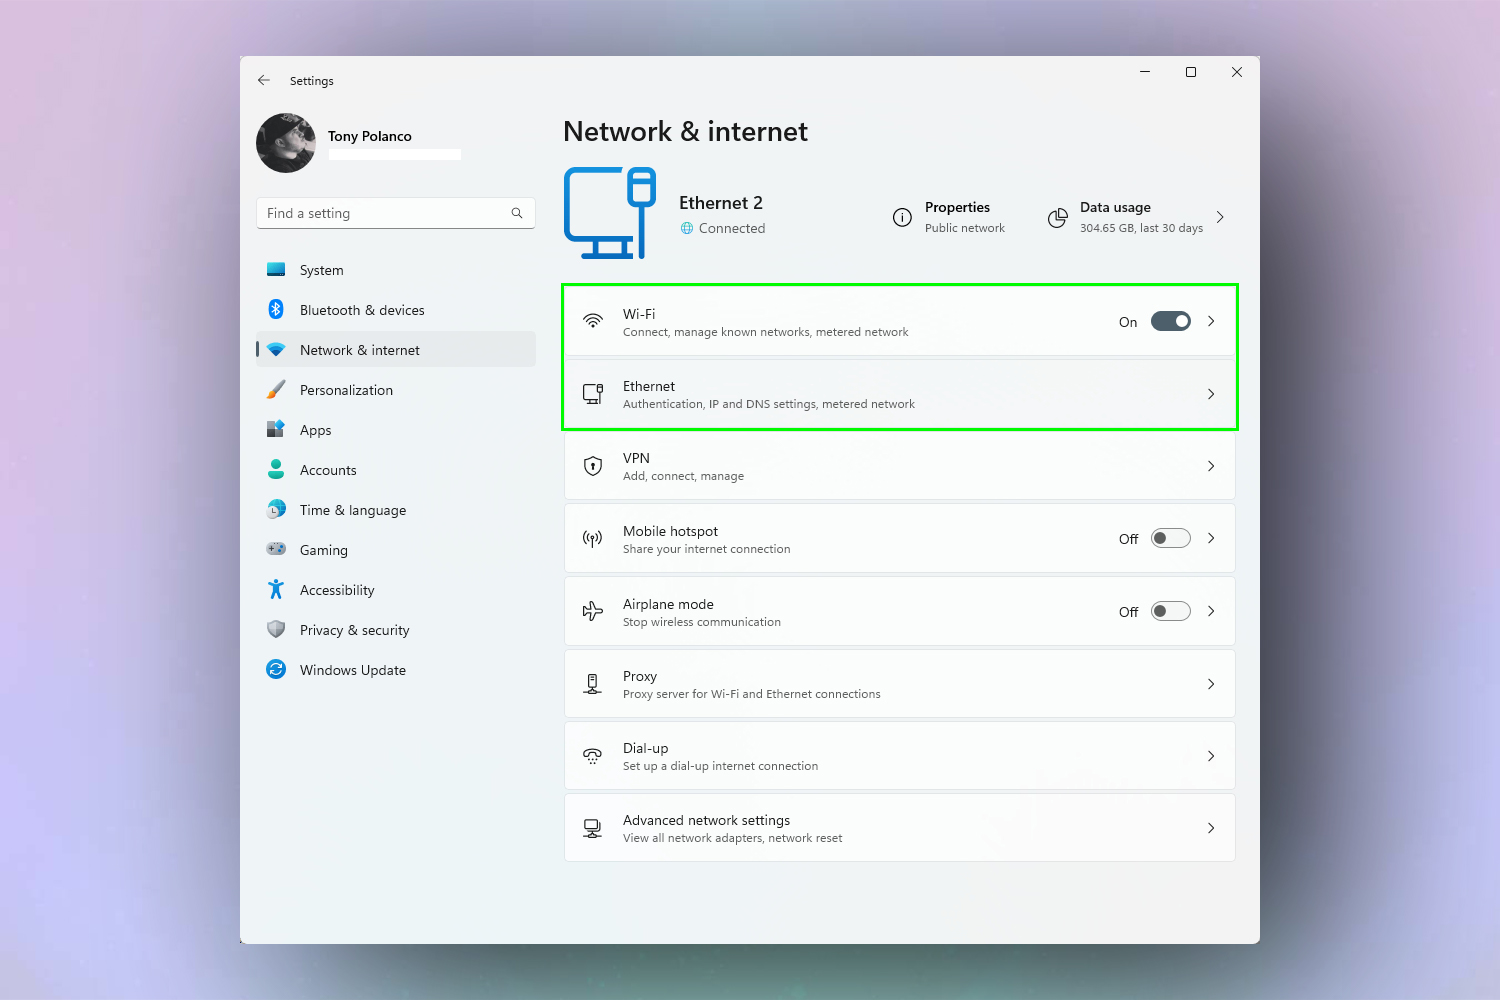 A screenshot showing the Windows Network & internet menu